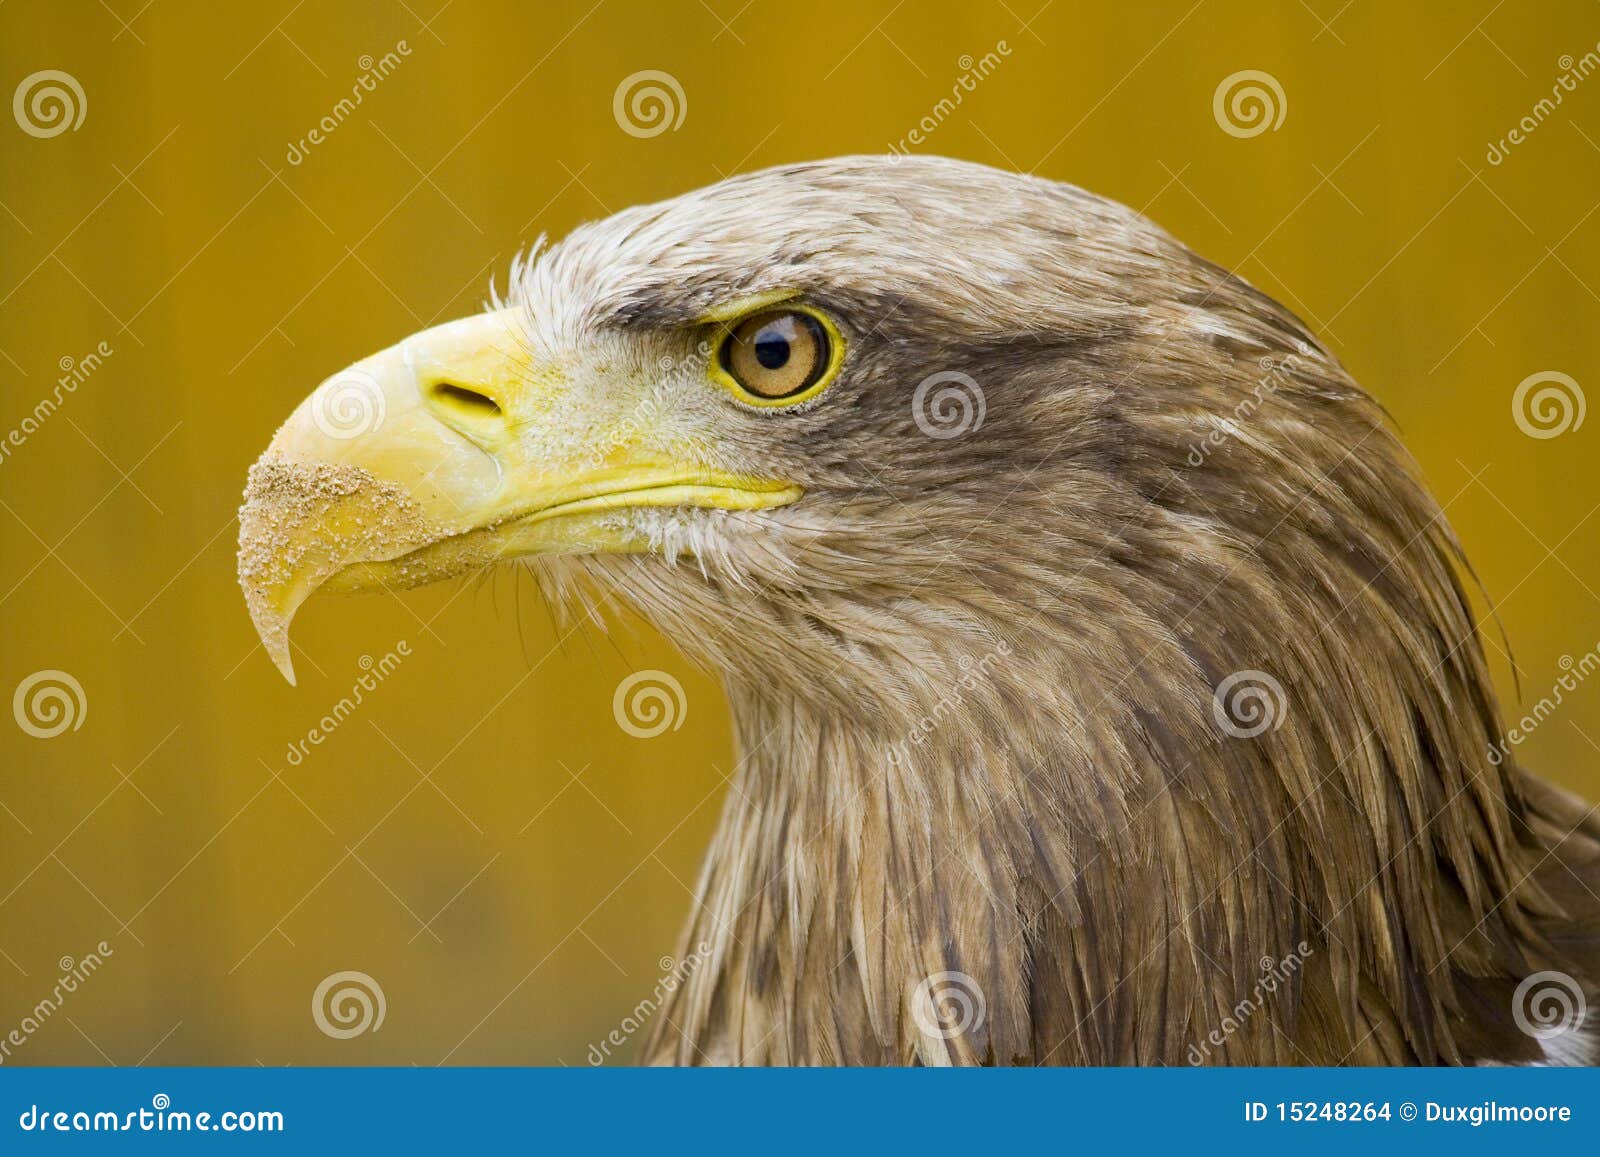 eagle eye - sand beak